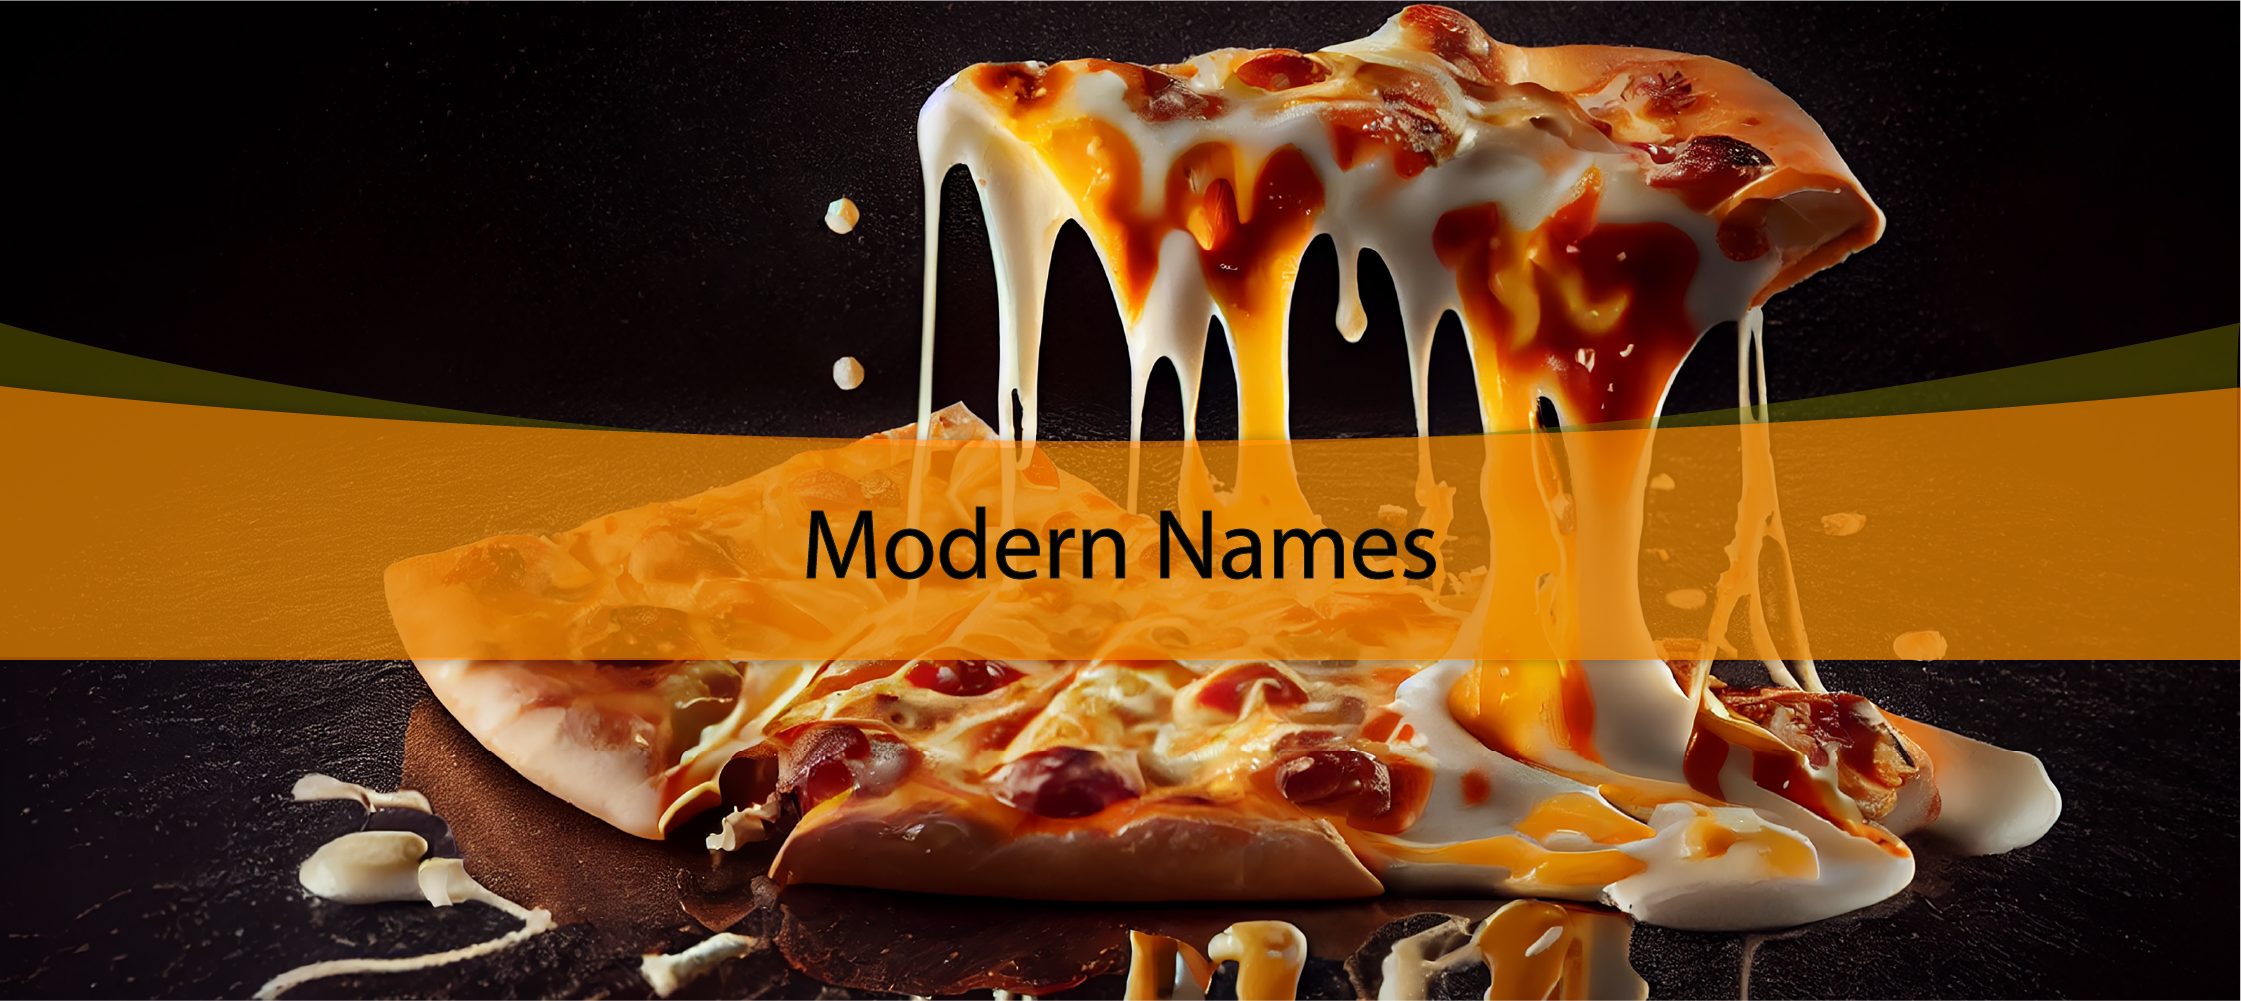 Modern names